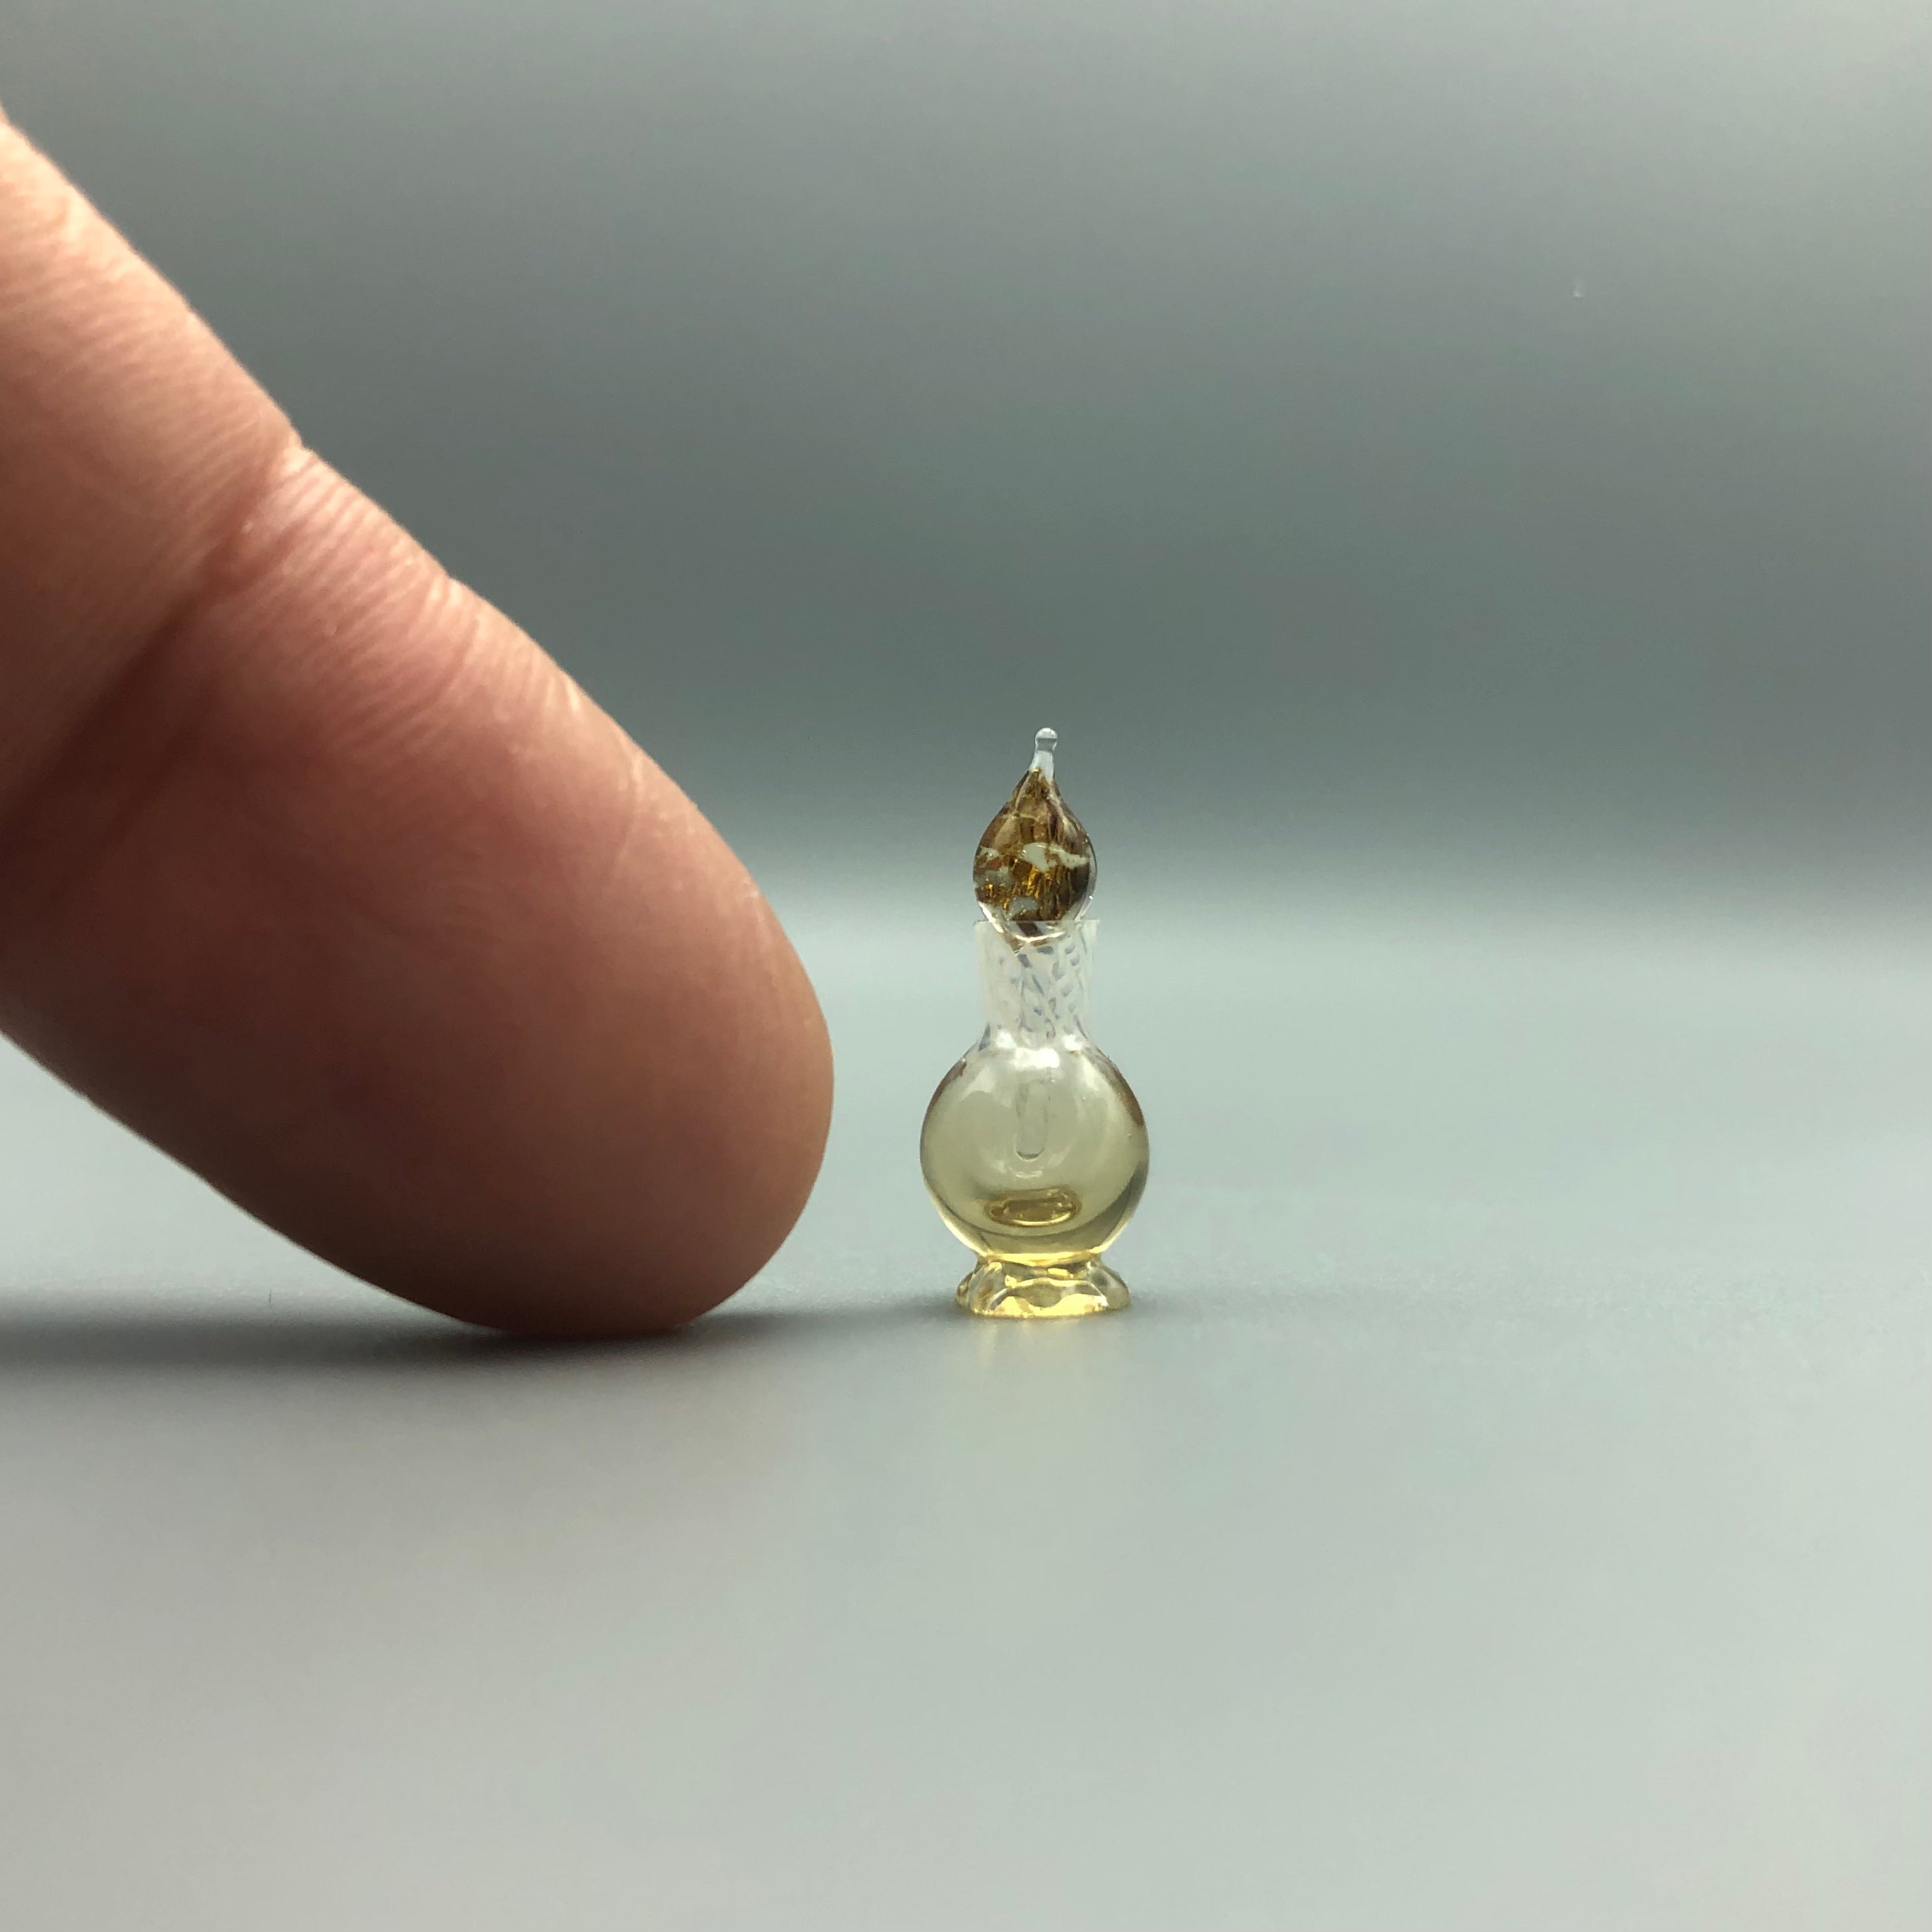 Miniatura de Cristal Bote de Perfume